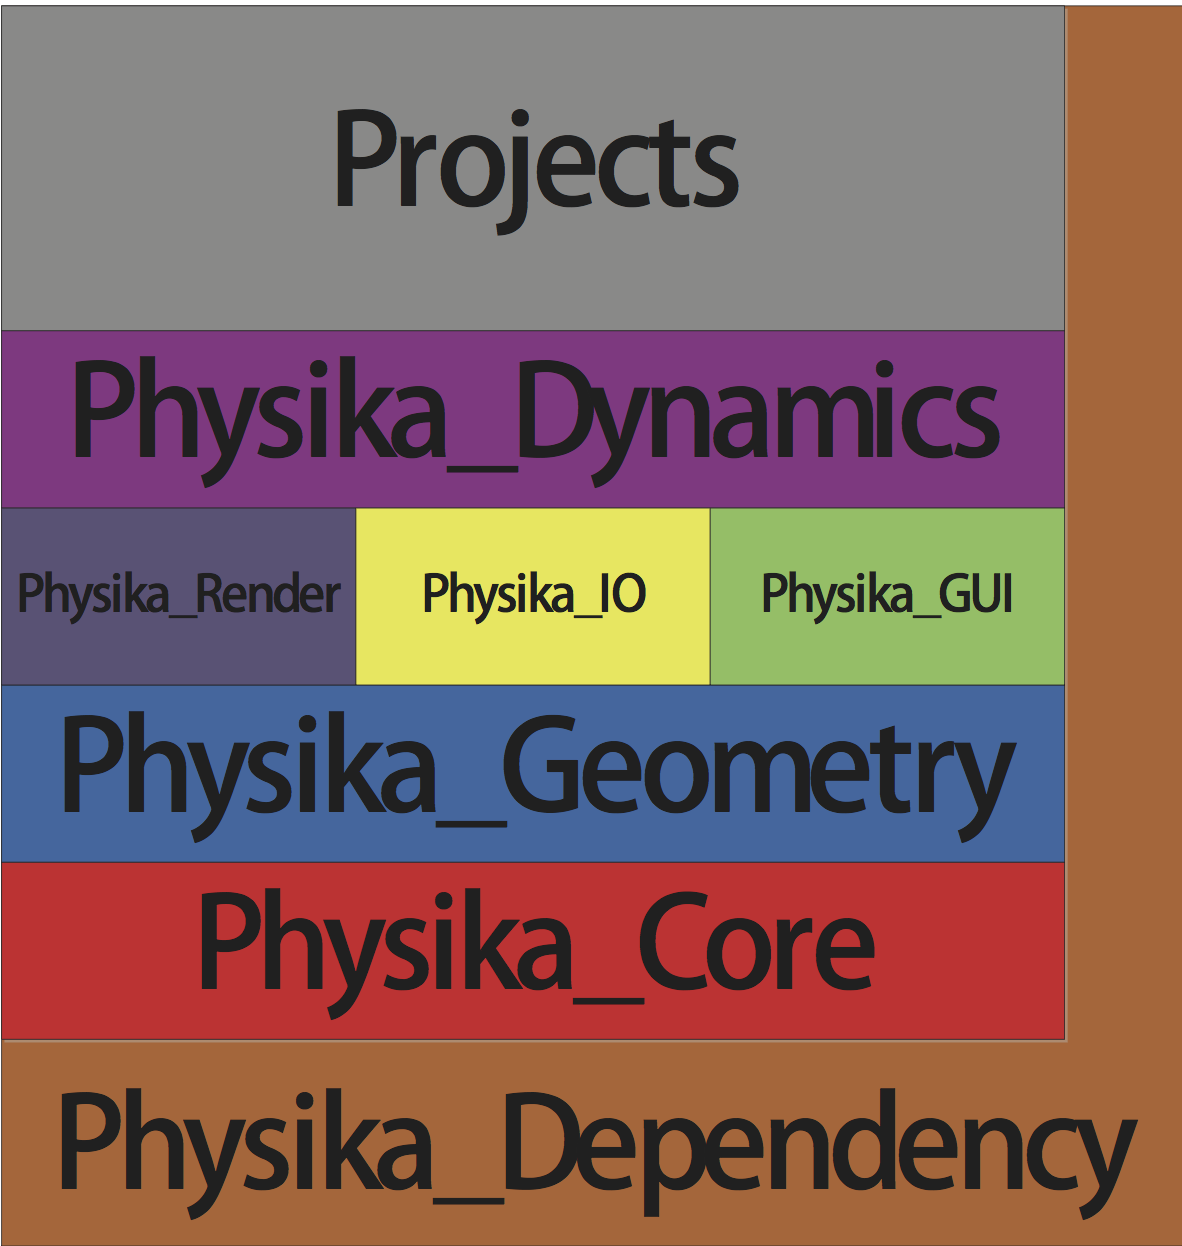 Physika architecture